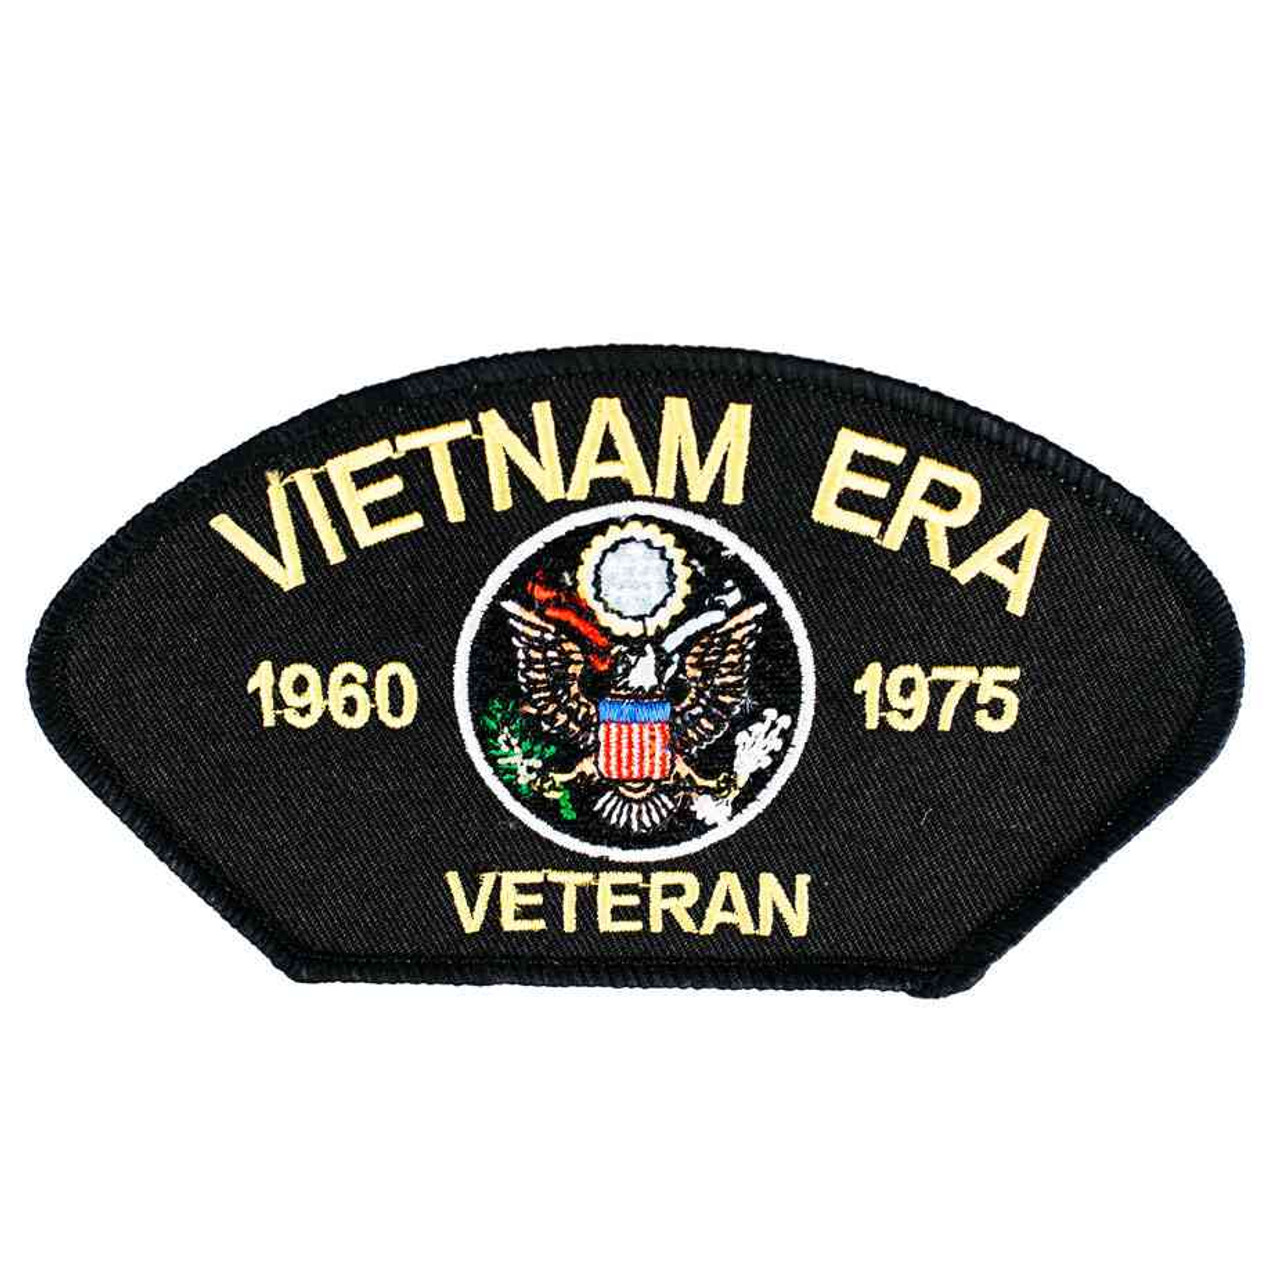 Vietnam Era Veteran Patch with Eagle Emblem